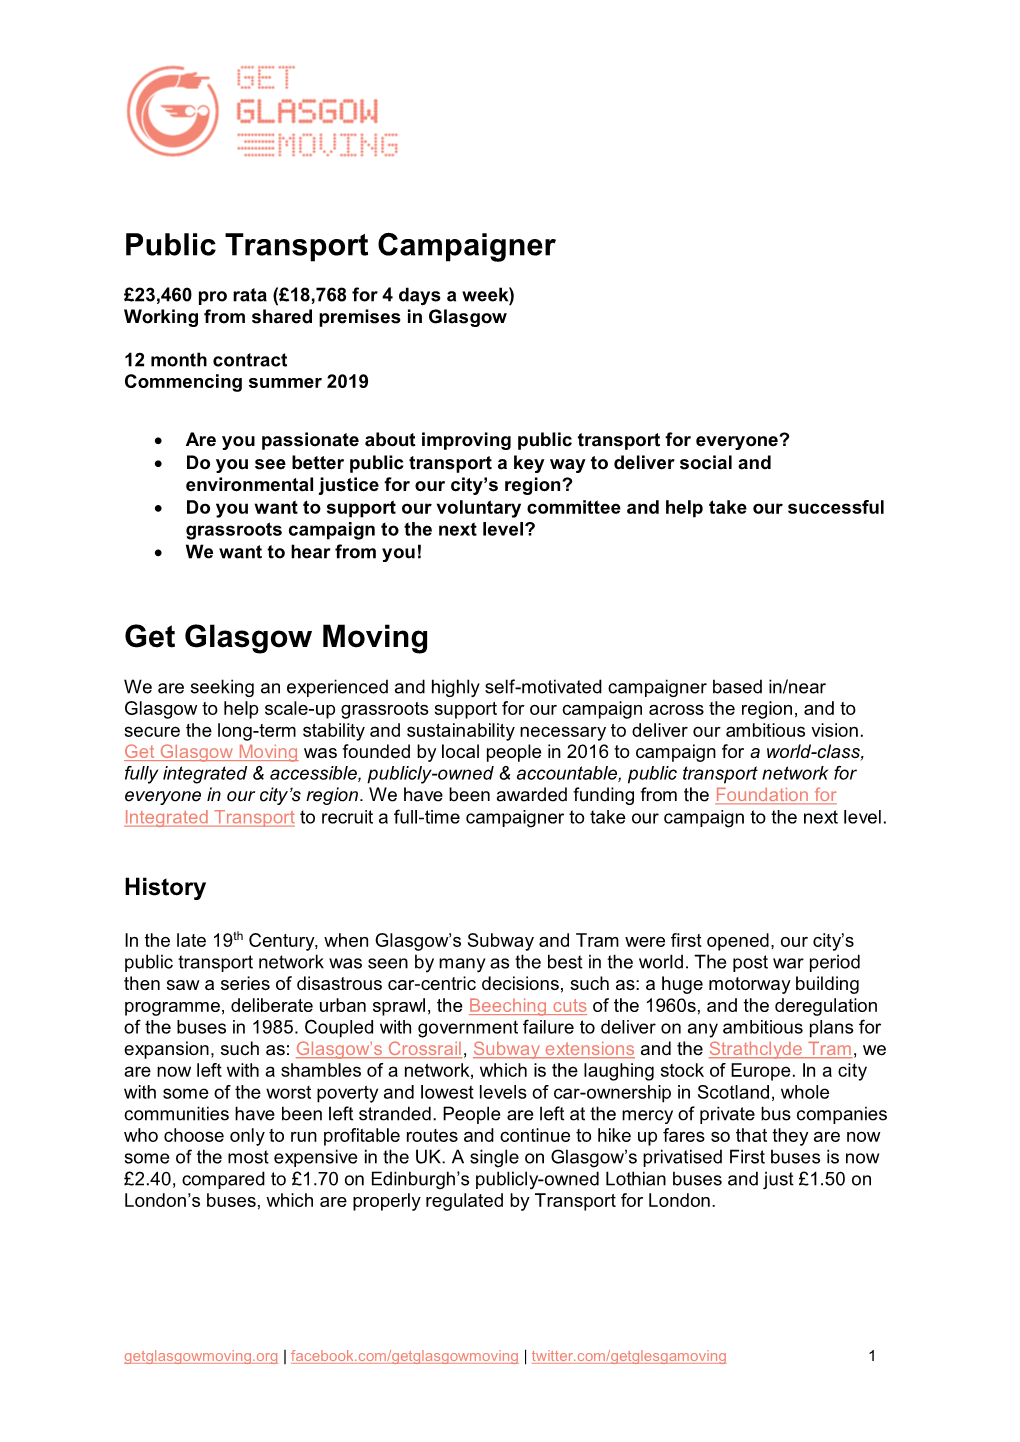 Public Transport Campaigner Get Glasgow Moving